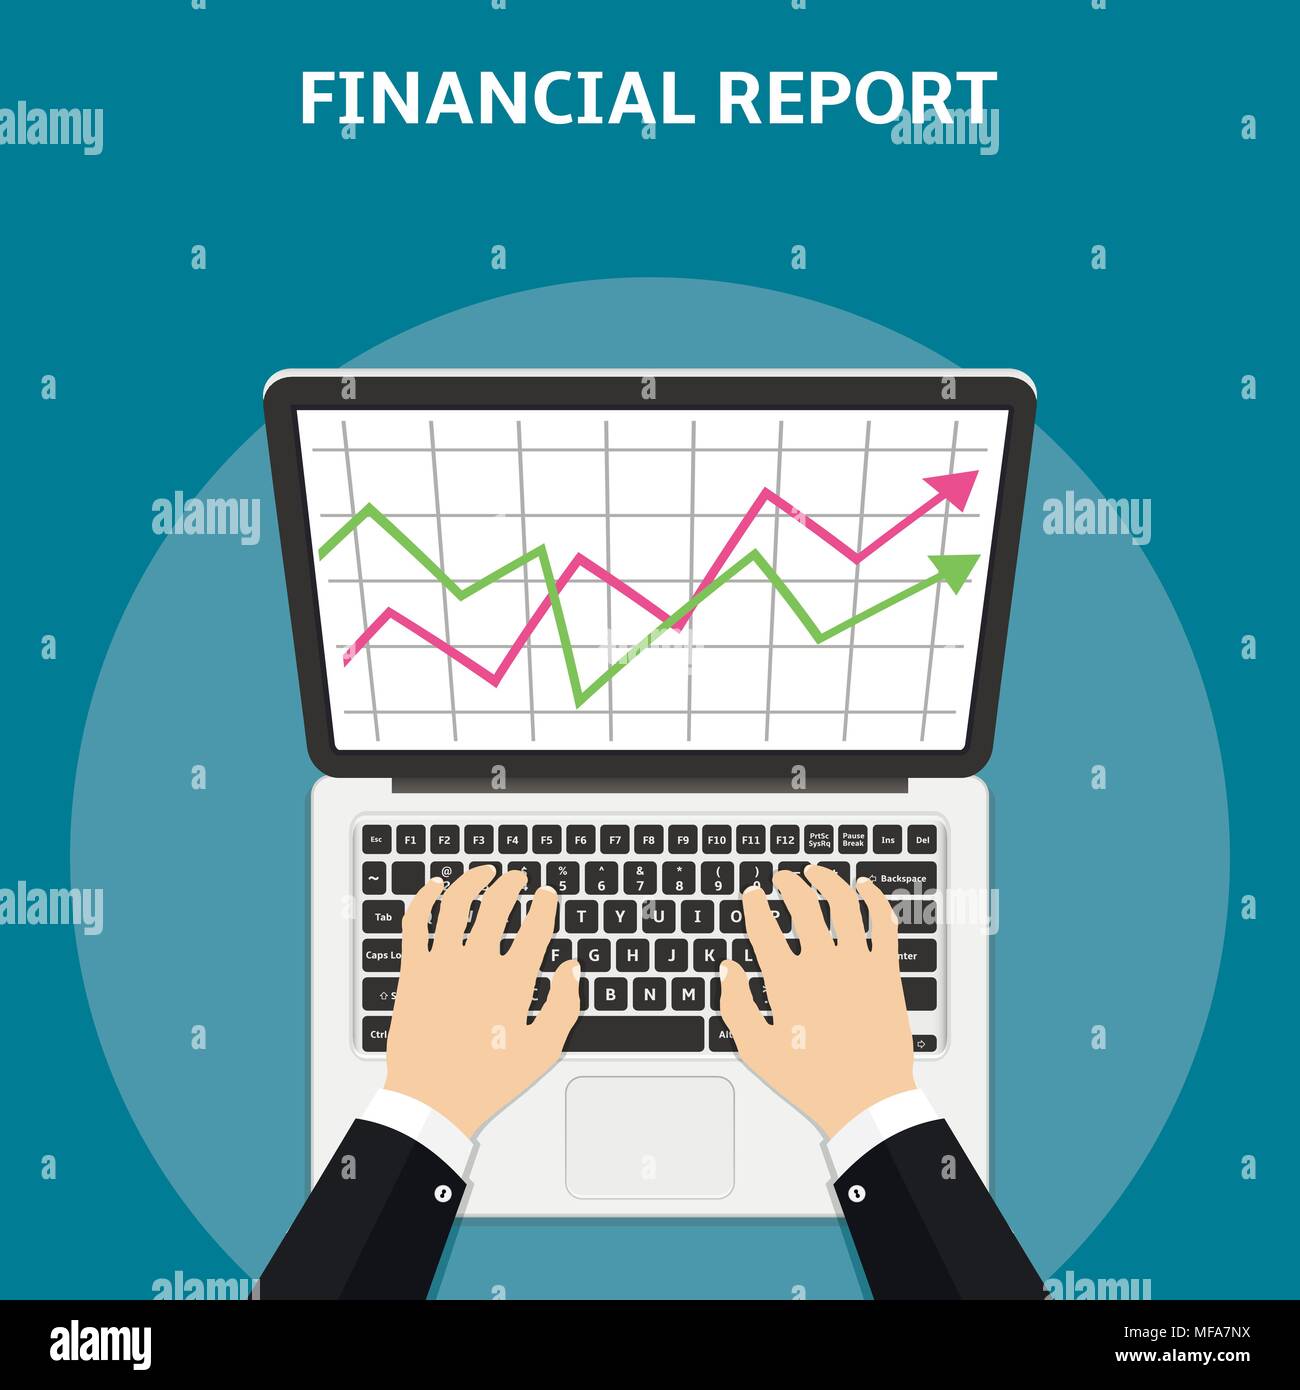 Financial report concept. Flat style vector. Stock Vector